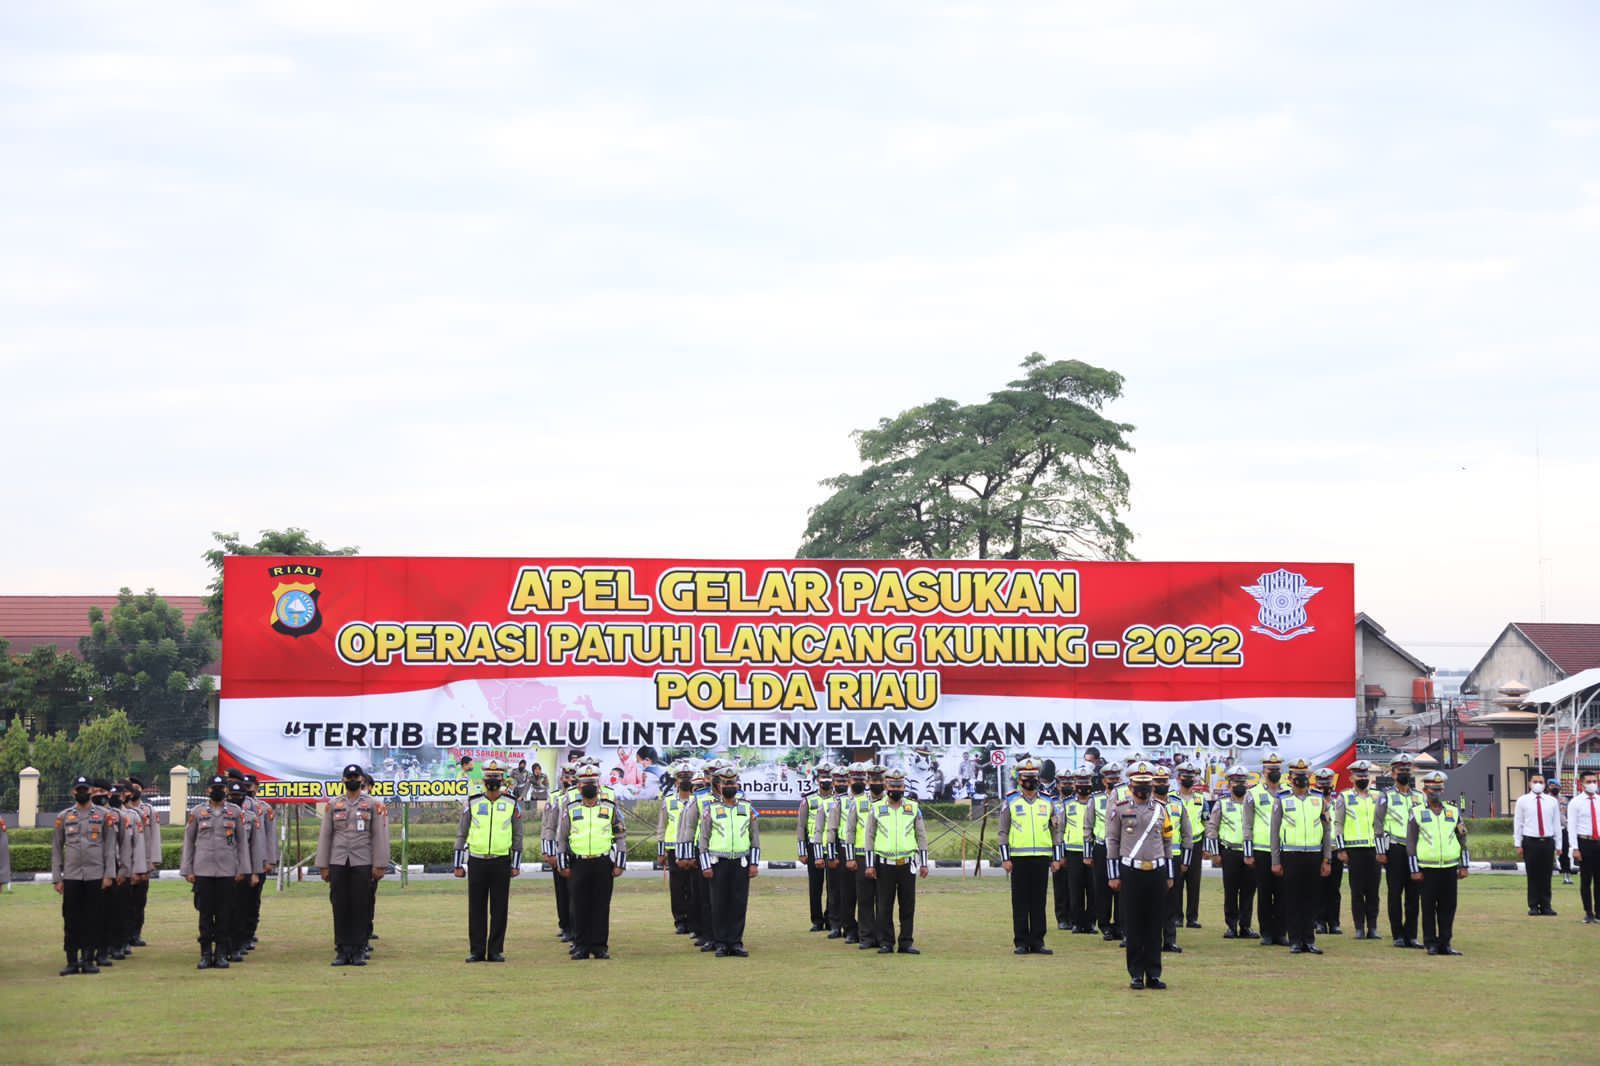 Operasi Patuh Lancang Kuning 2022 Digelar Mulai Hari Ini,Kapolda Riau Pimpin Apel Gabungan.